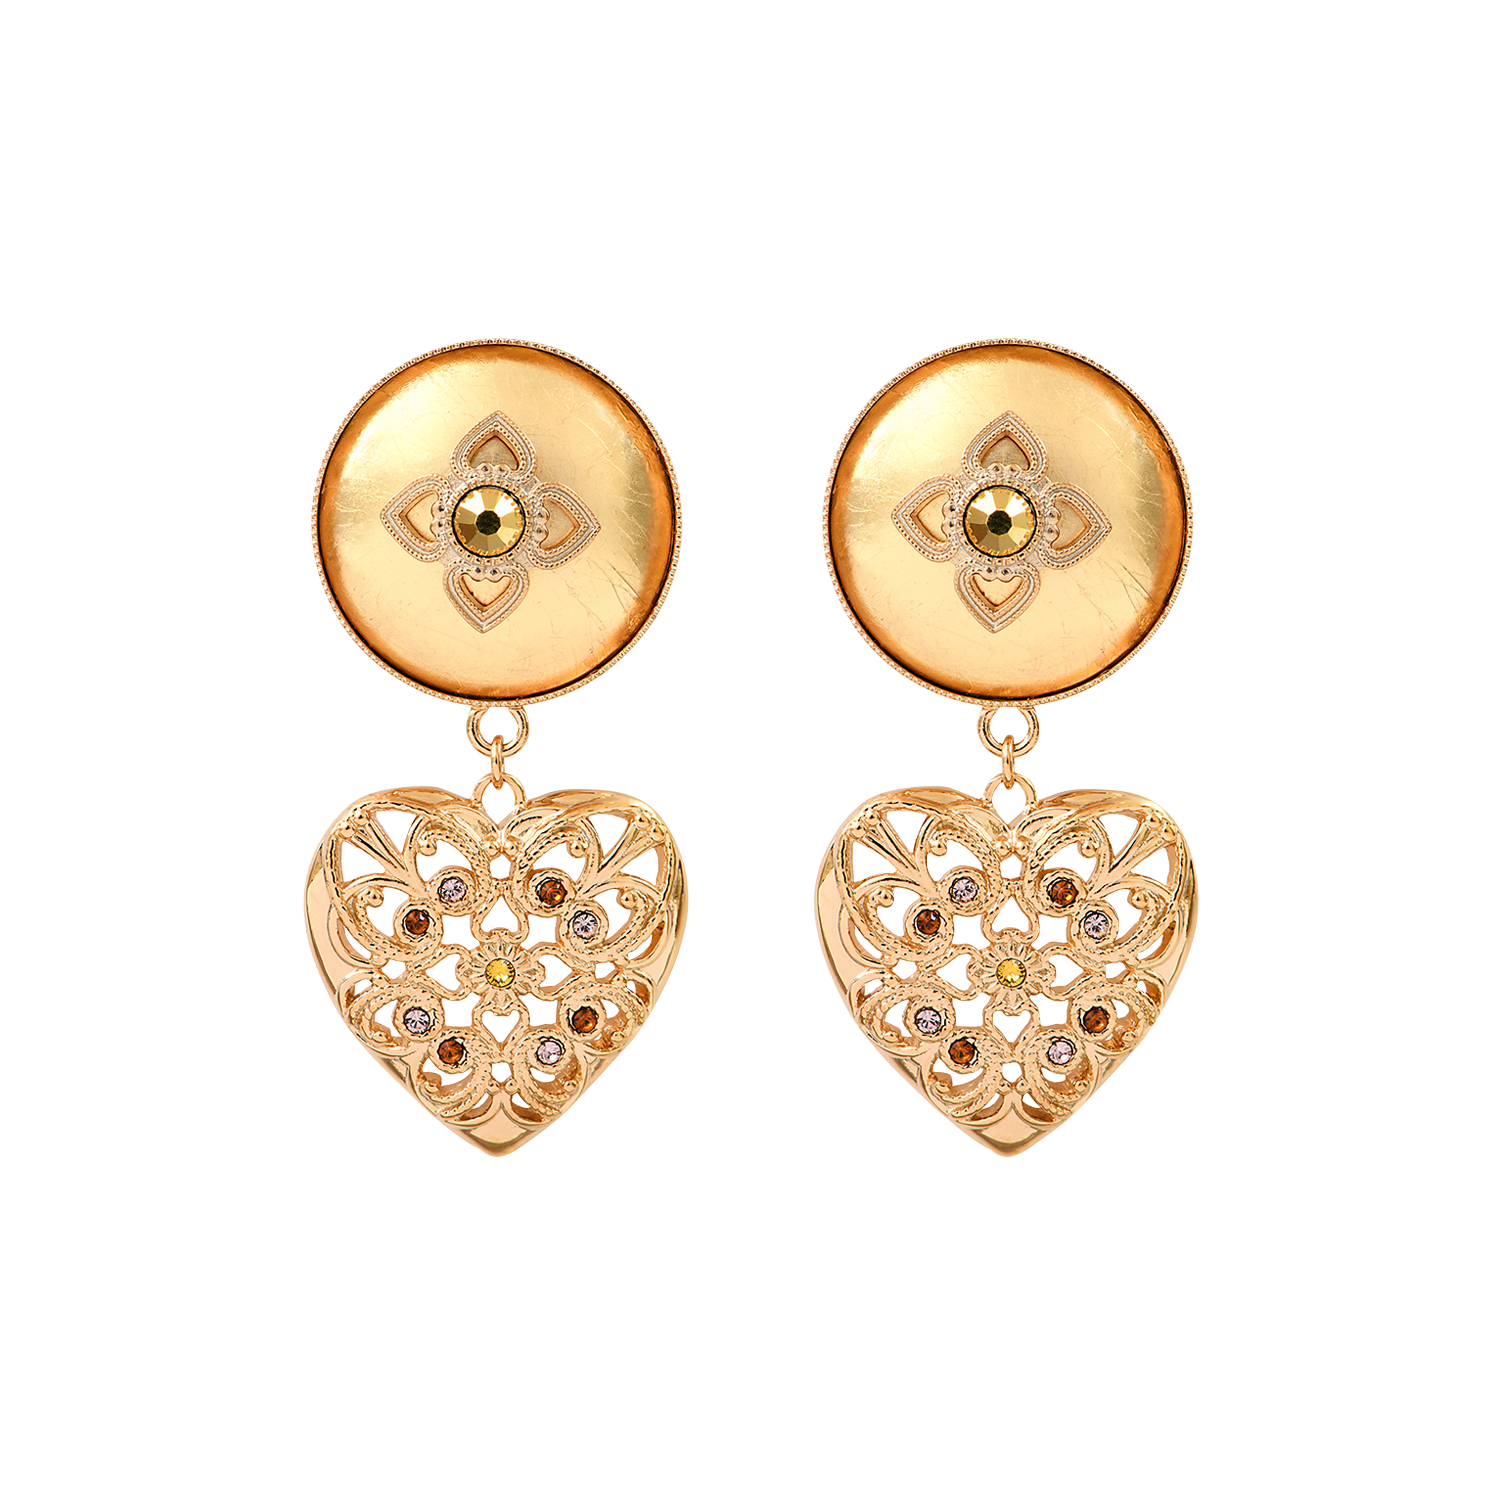 Fringe Invisible Clip on Earrings Dangle Gold Chandelier Clip - Etsy |  Earrings, Fine earrings, Clip on earrings